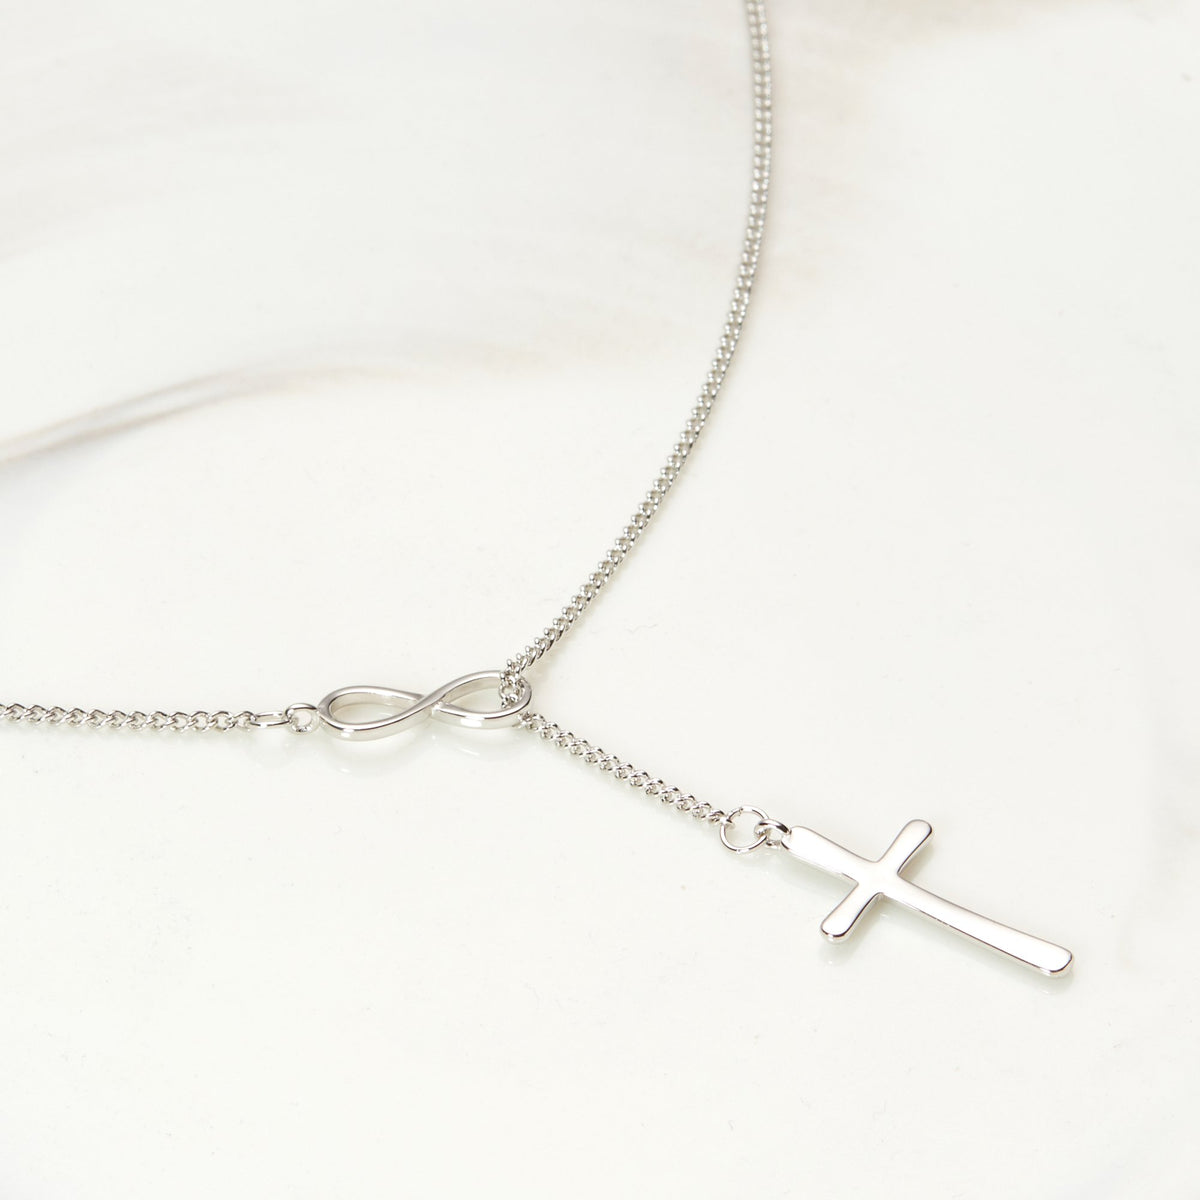 Baptism Cross Necklace - Dear Ava, Jewelry / Necklaces / Pendants